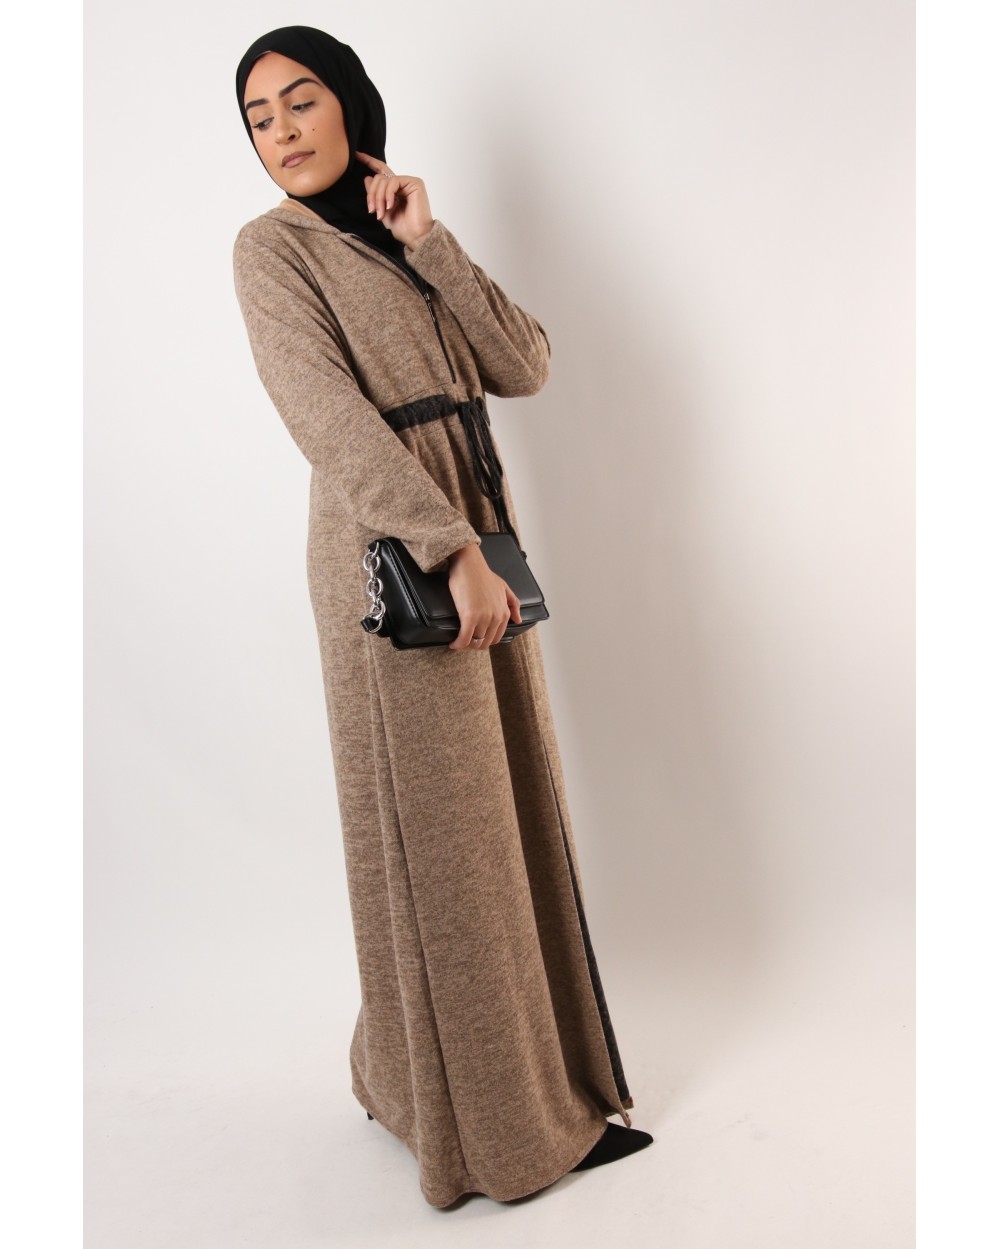 Two-tone Hajjira dress with hood and zip